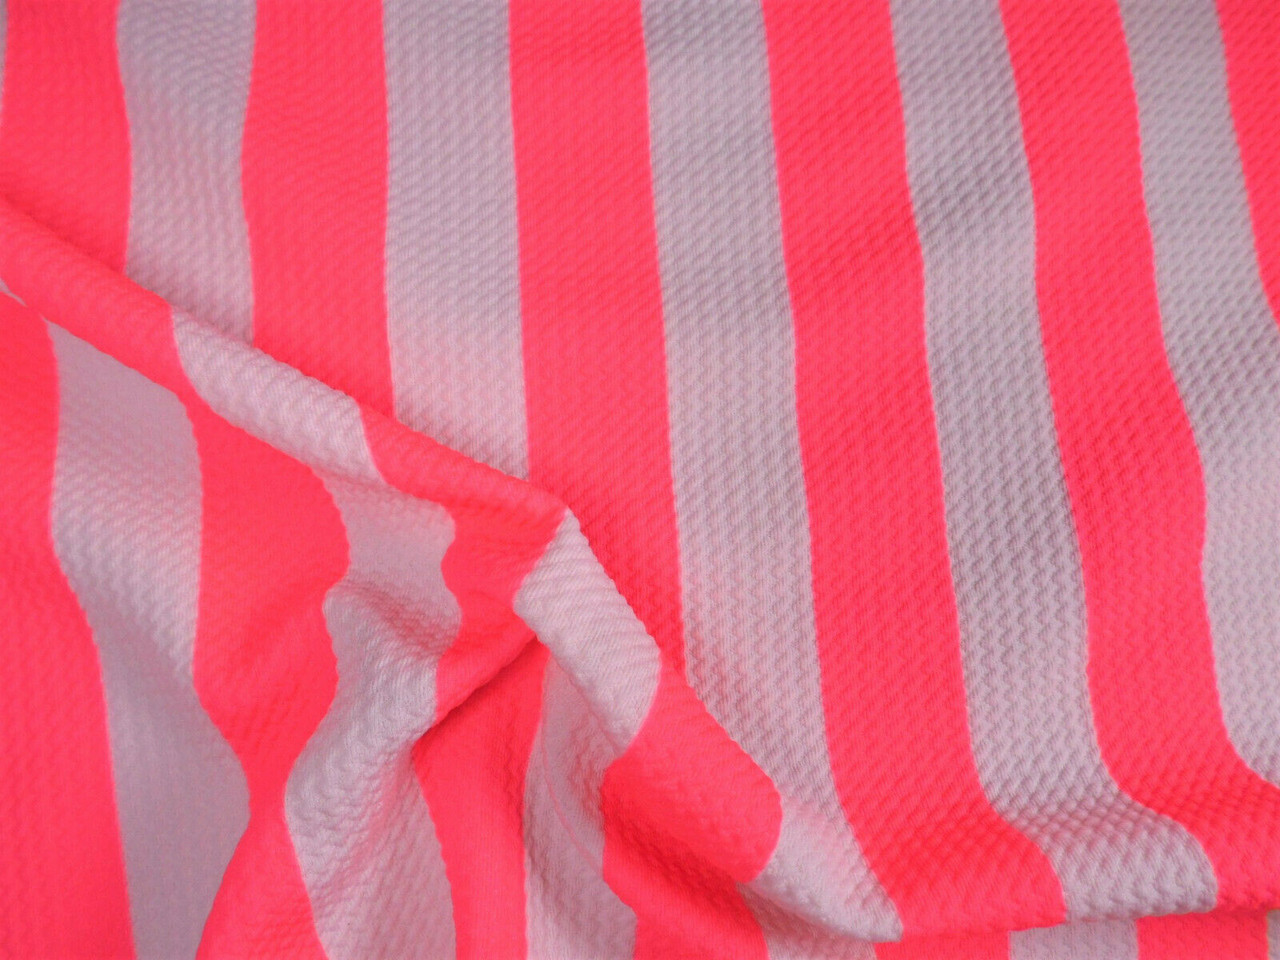 neon pink stripe